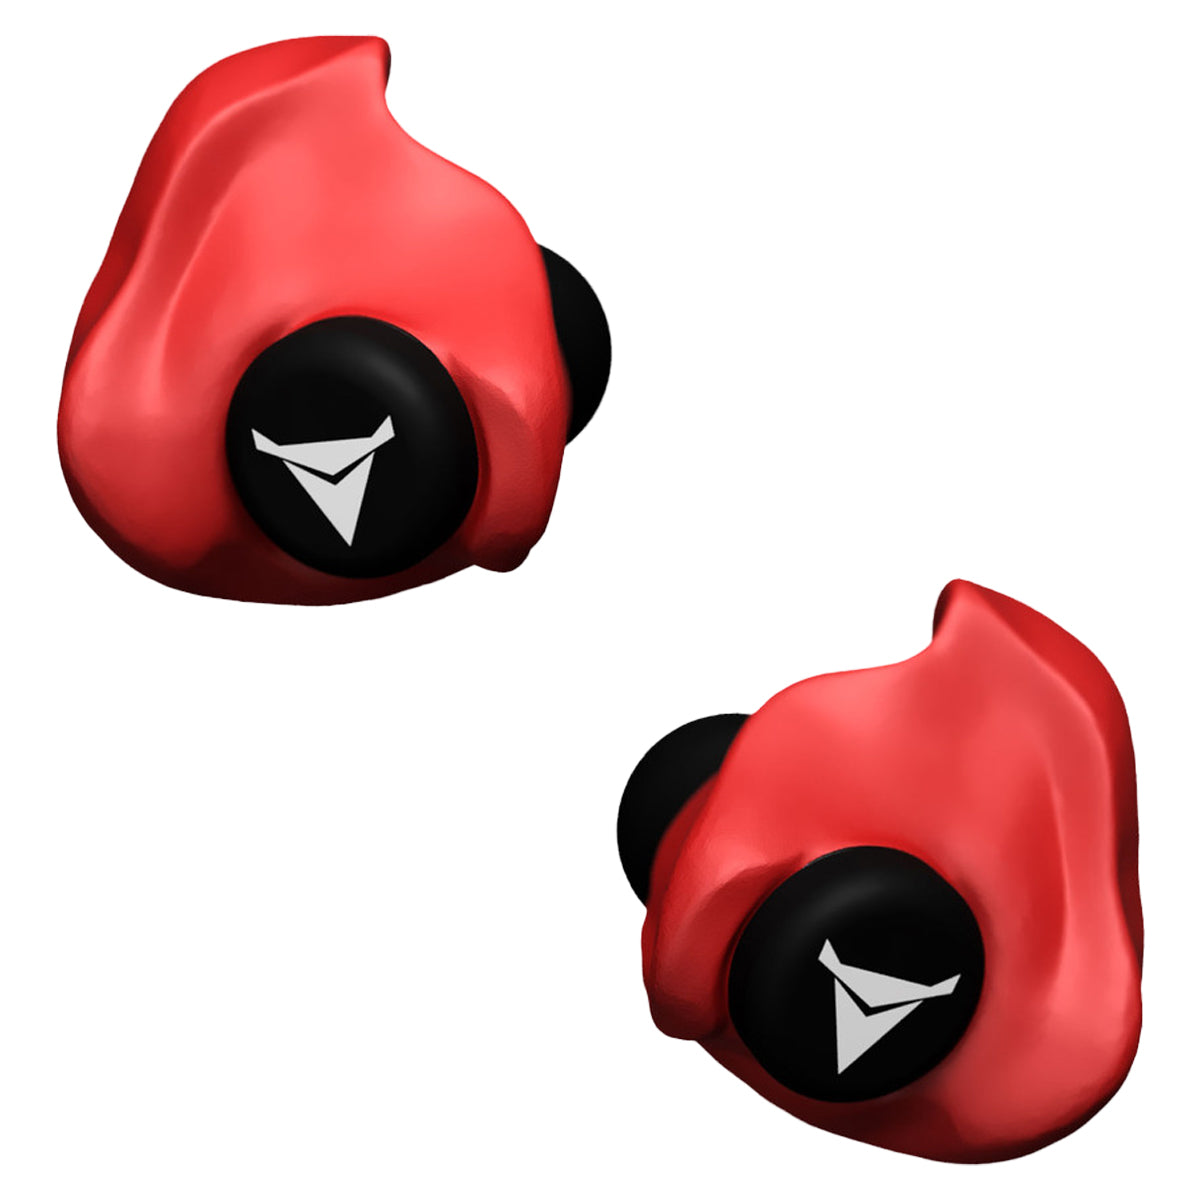 Decibullz Custom Molded Earplugs in Red by GOHUNT | Decibullz - GOHUNT Shop